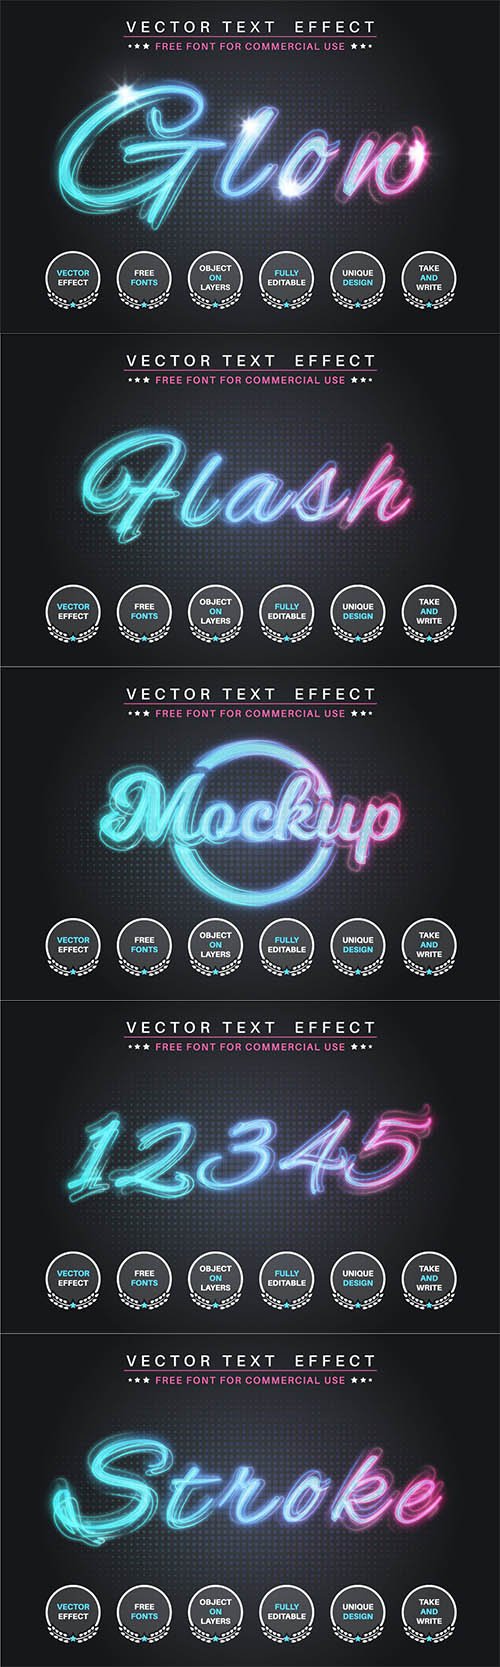 Glow stroke - editable text effect, font style